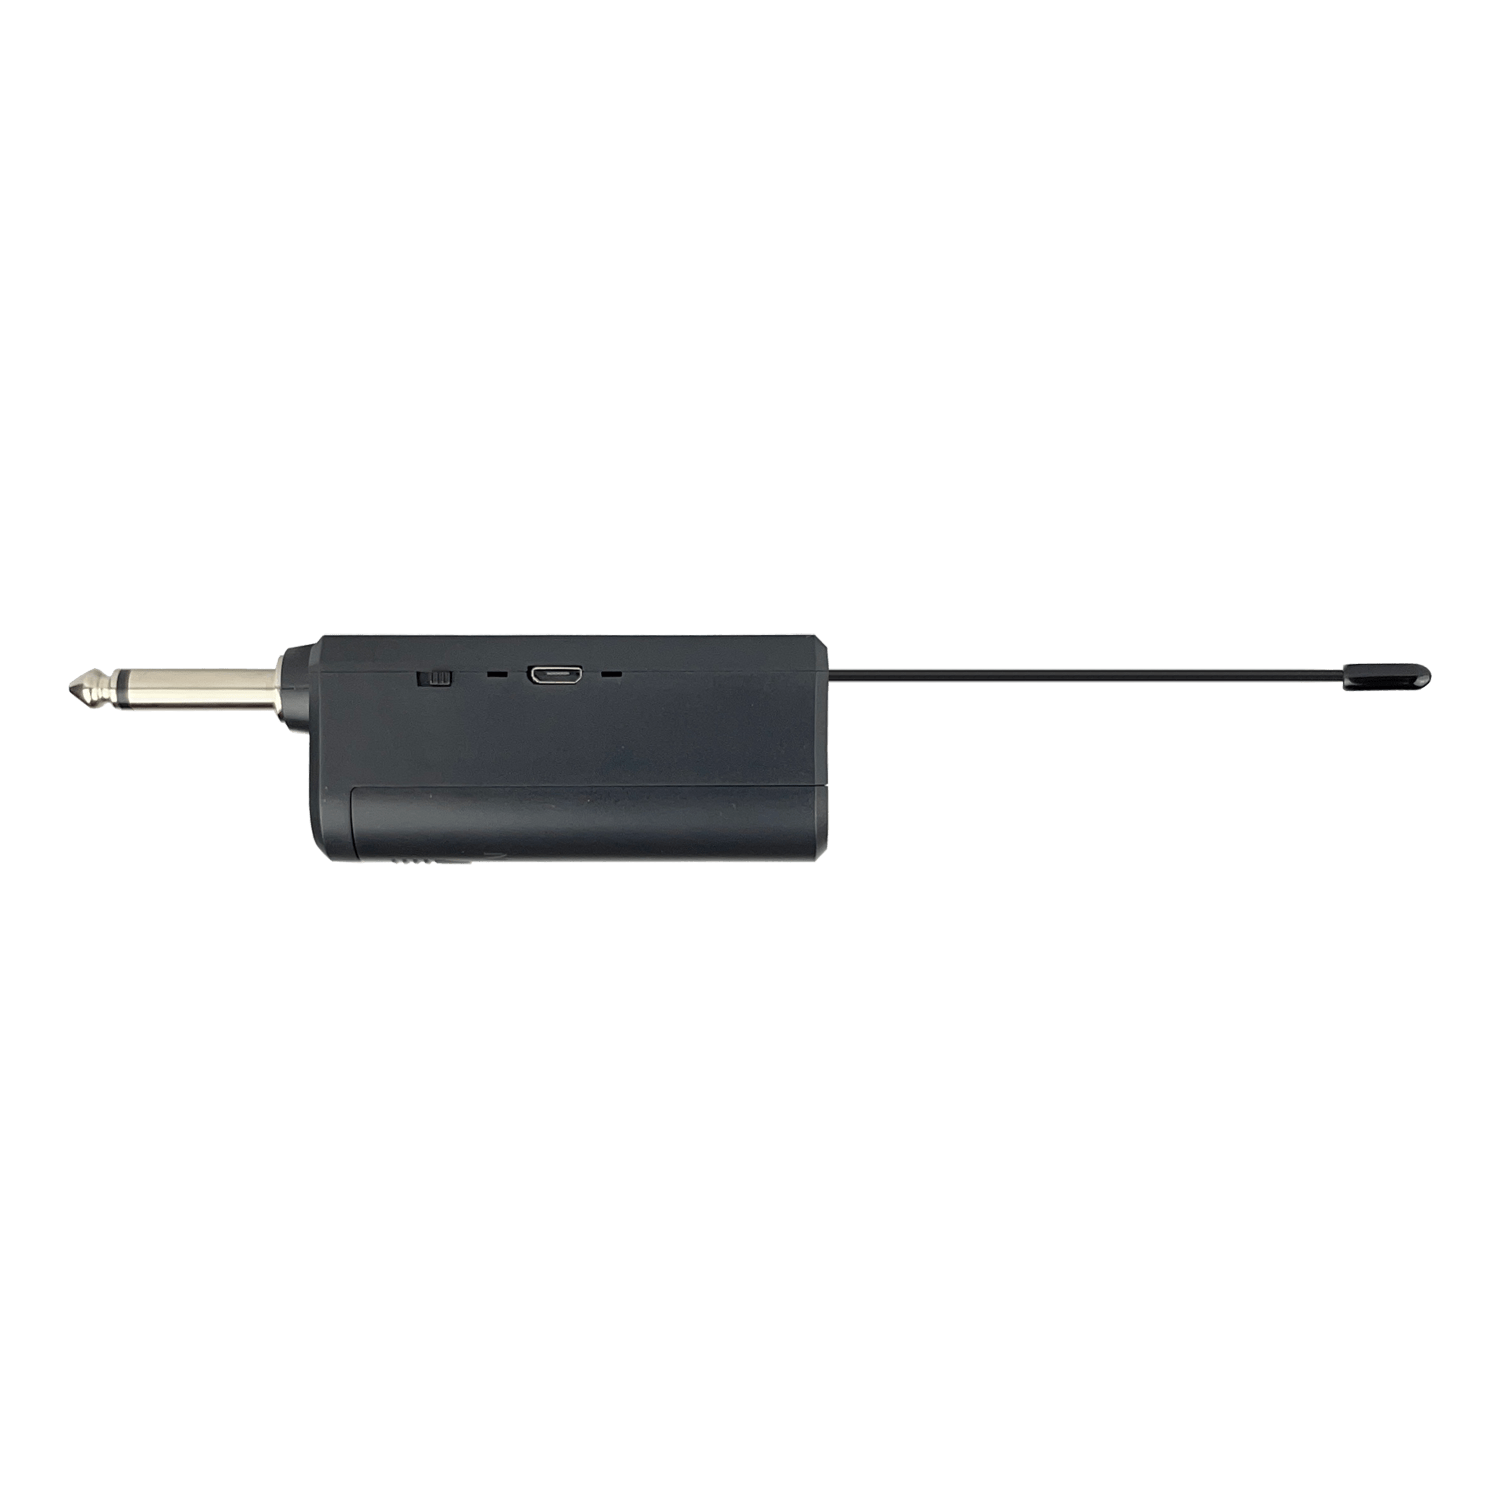 ImPro UHF-88II Professional UHF Wireless Microphones